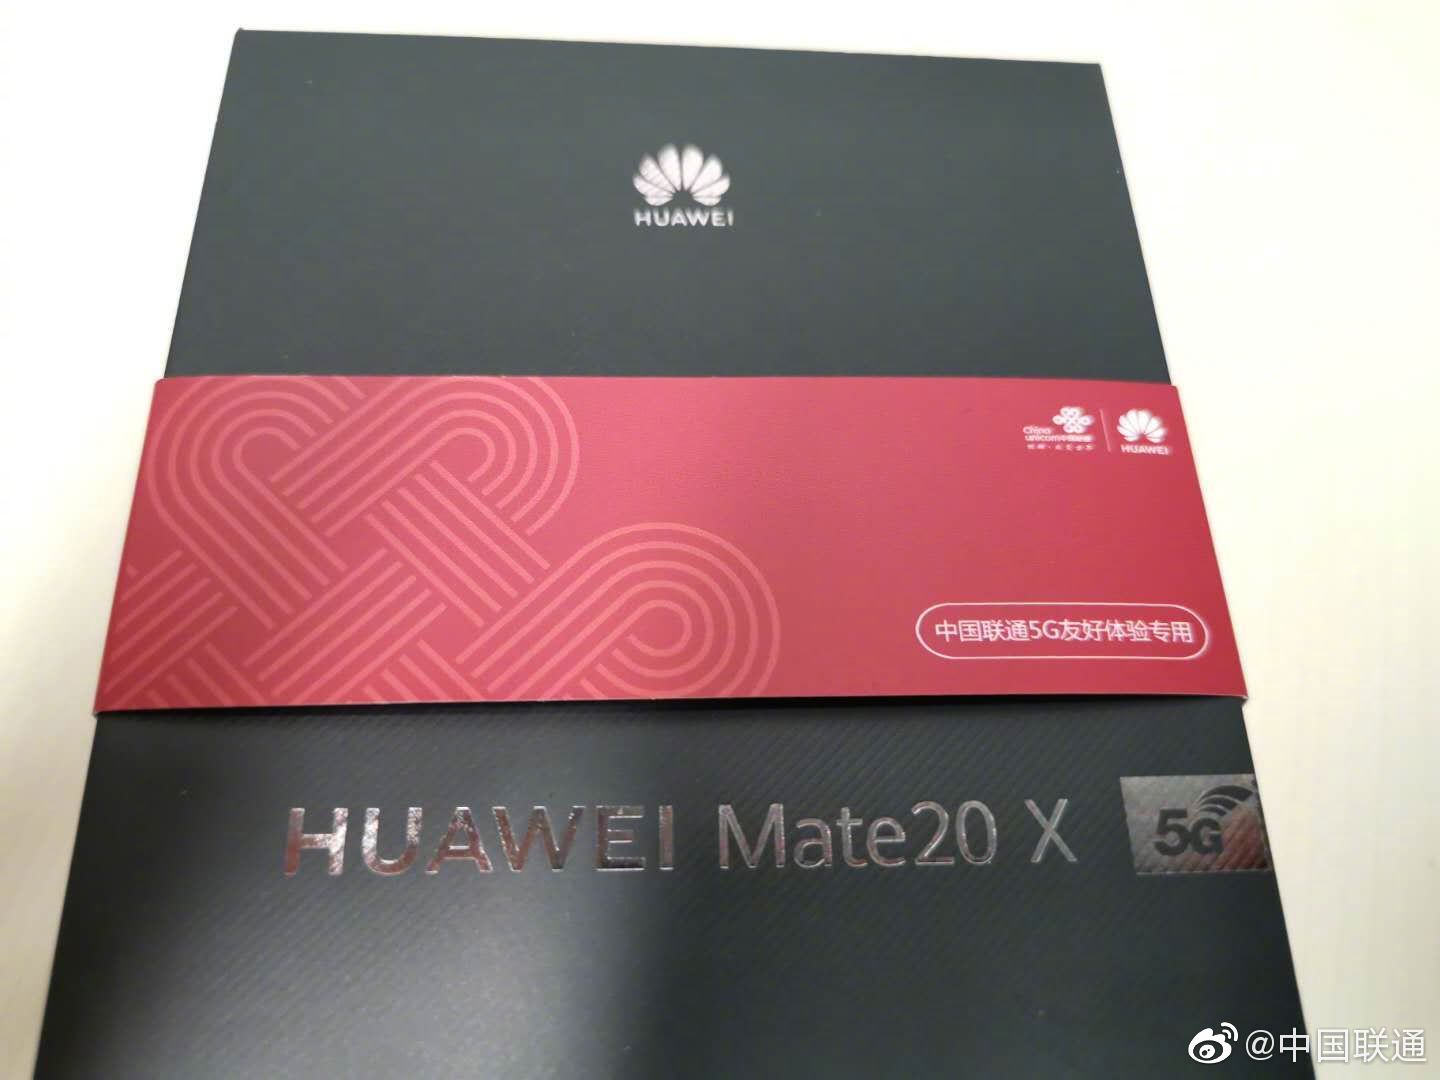 Huawei Mate 20 X Retail Box Leak